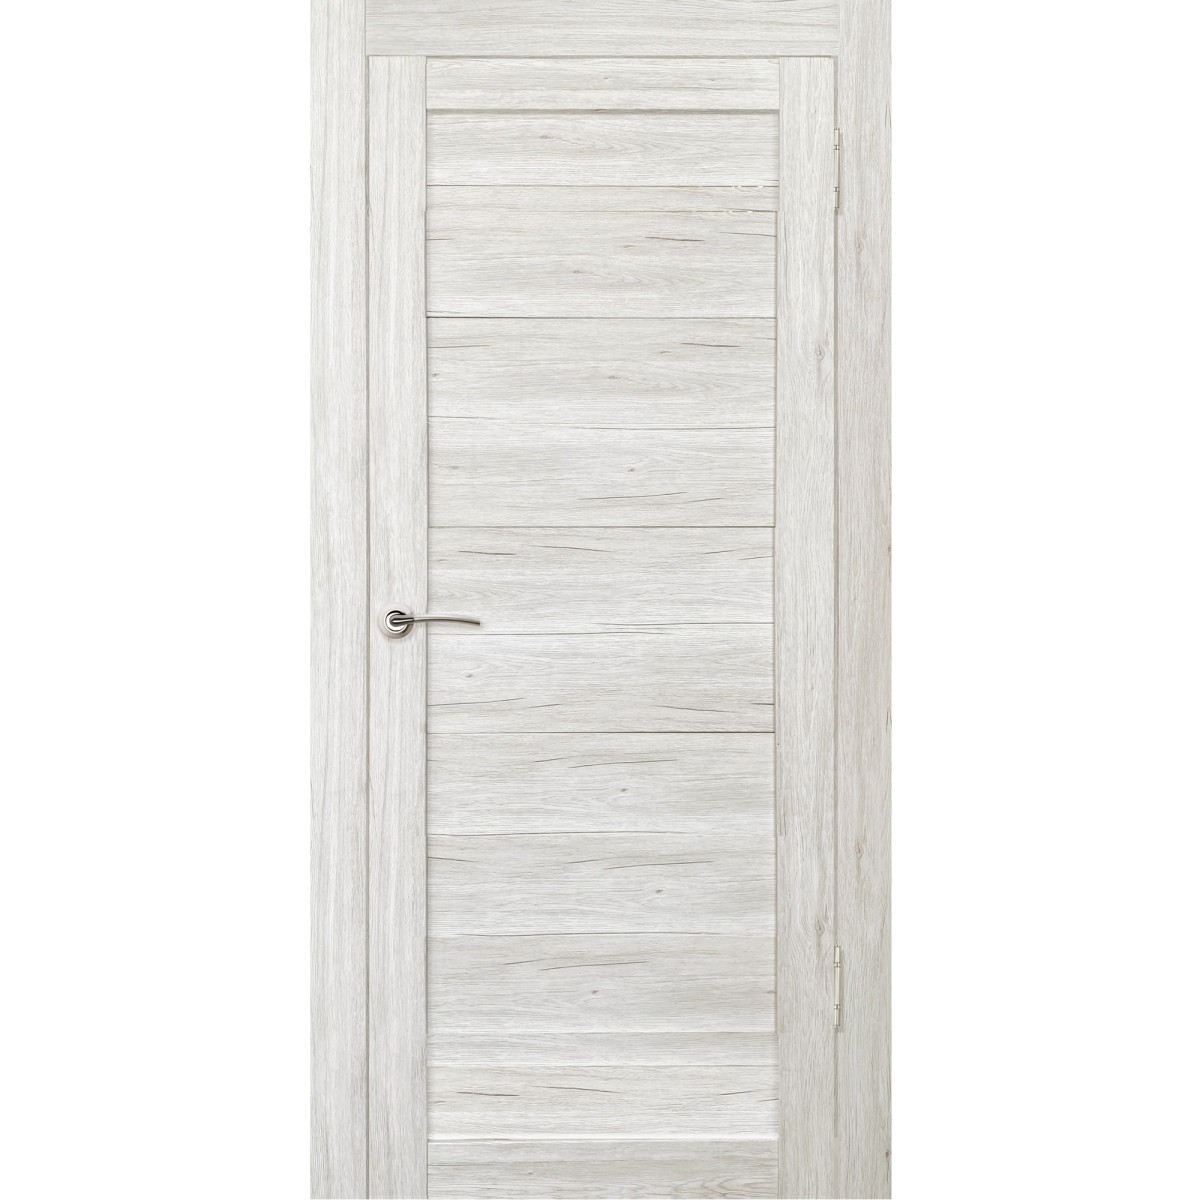 Дверь межкомнатная Тиволи 60х200 см с фурнитурой, ПВХ, цвет рустик серый